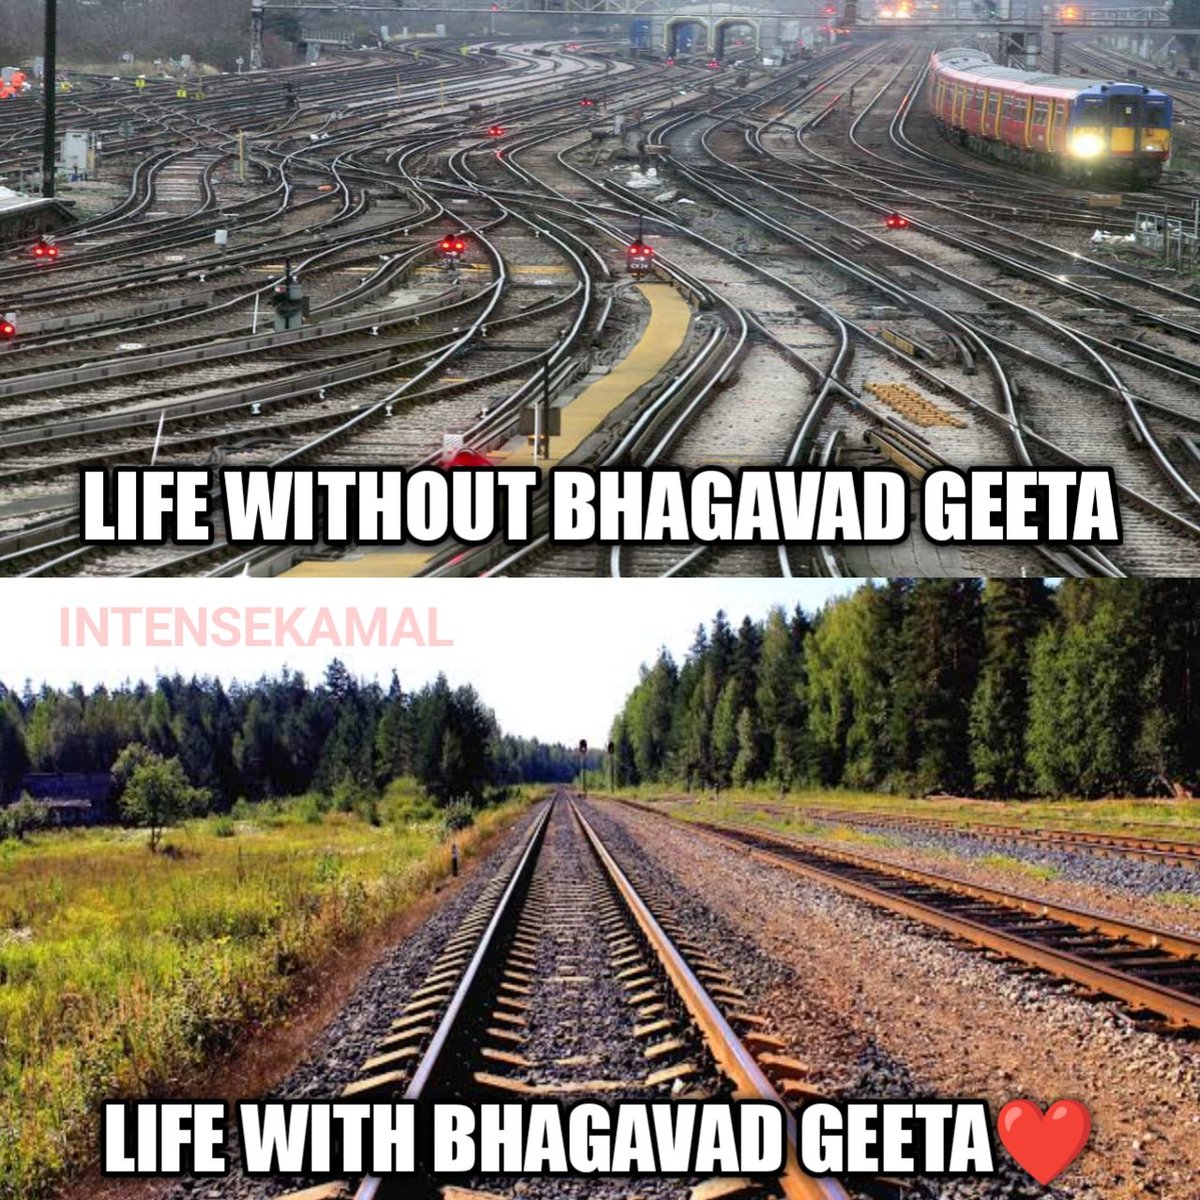 🙏😔 Hare Krishna #bhagavadgita #bhagavadgitaquotes #bhagavadgitachanting #harekrishna #lifecoach #lifelessons #lifegoals #lifeisbeautiful #intensekamal